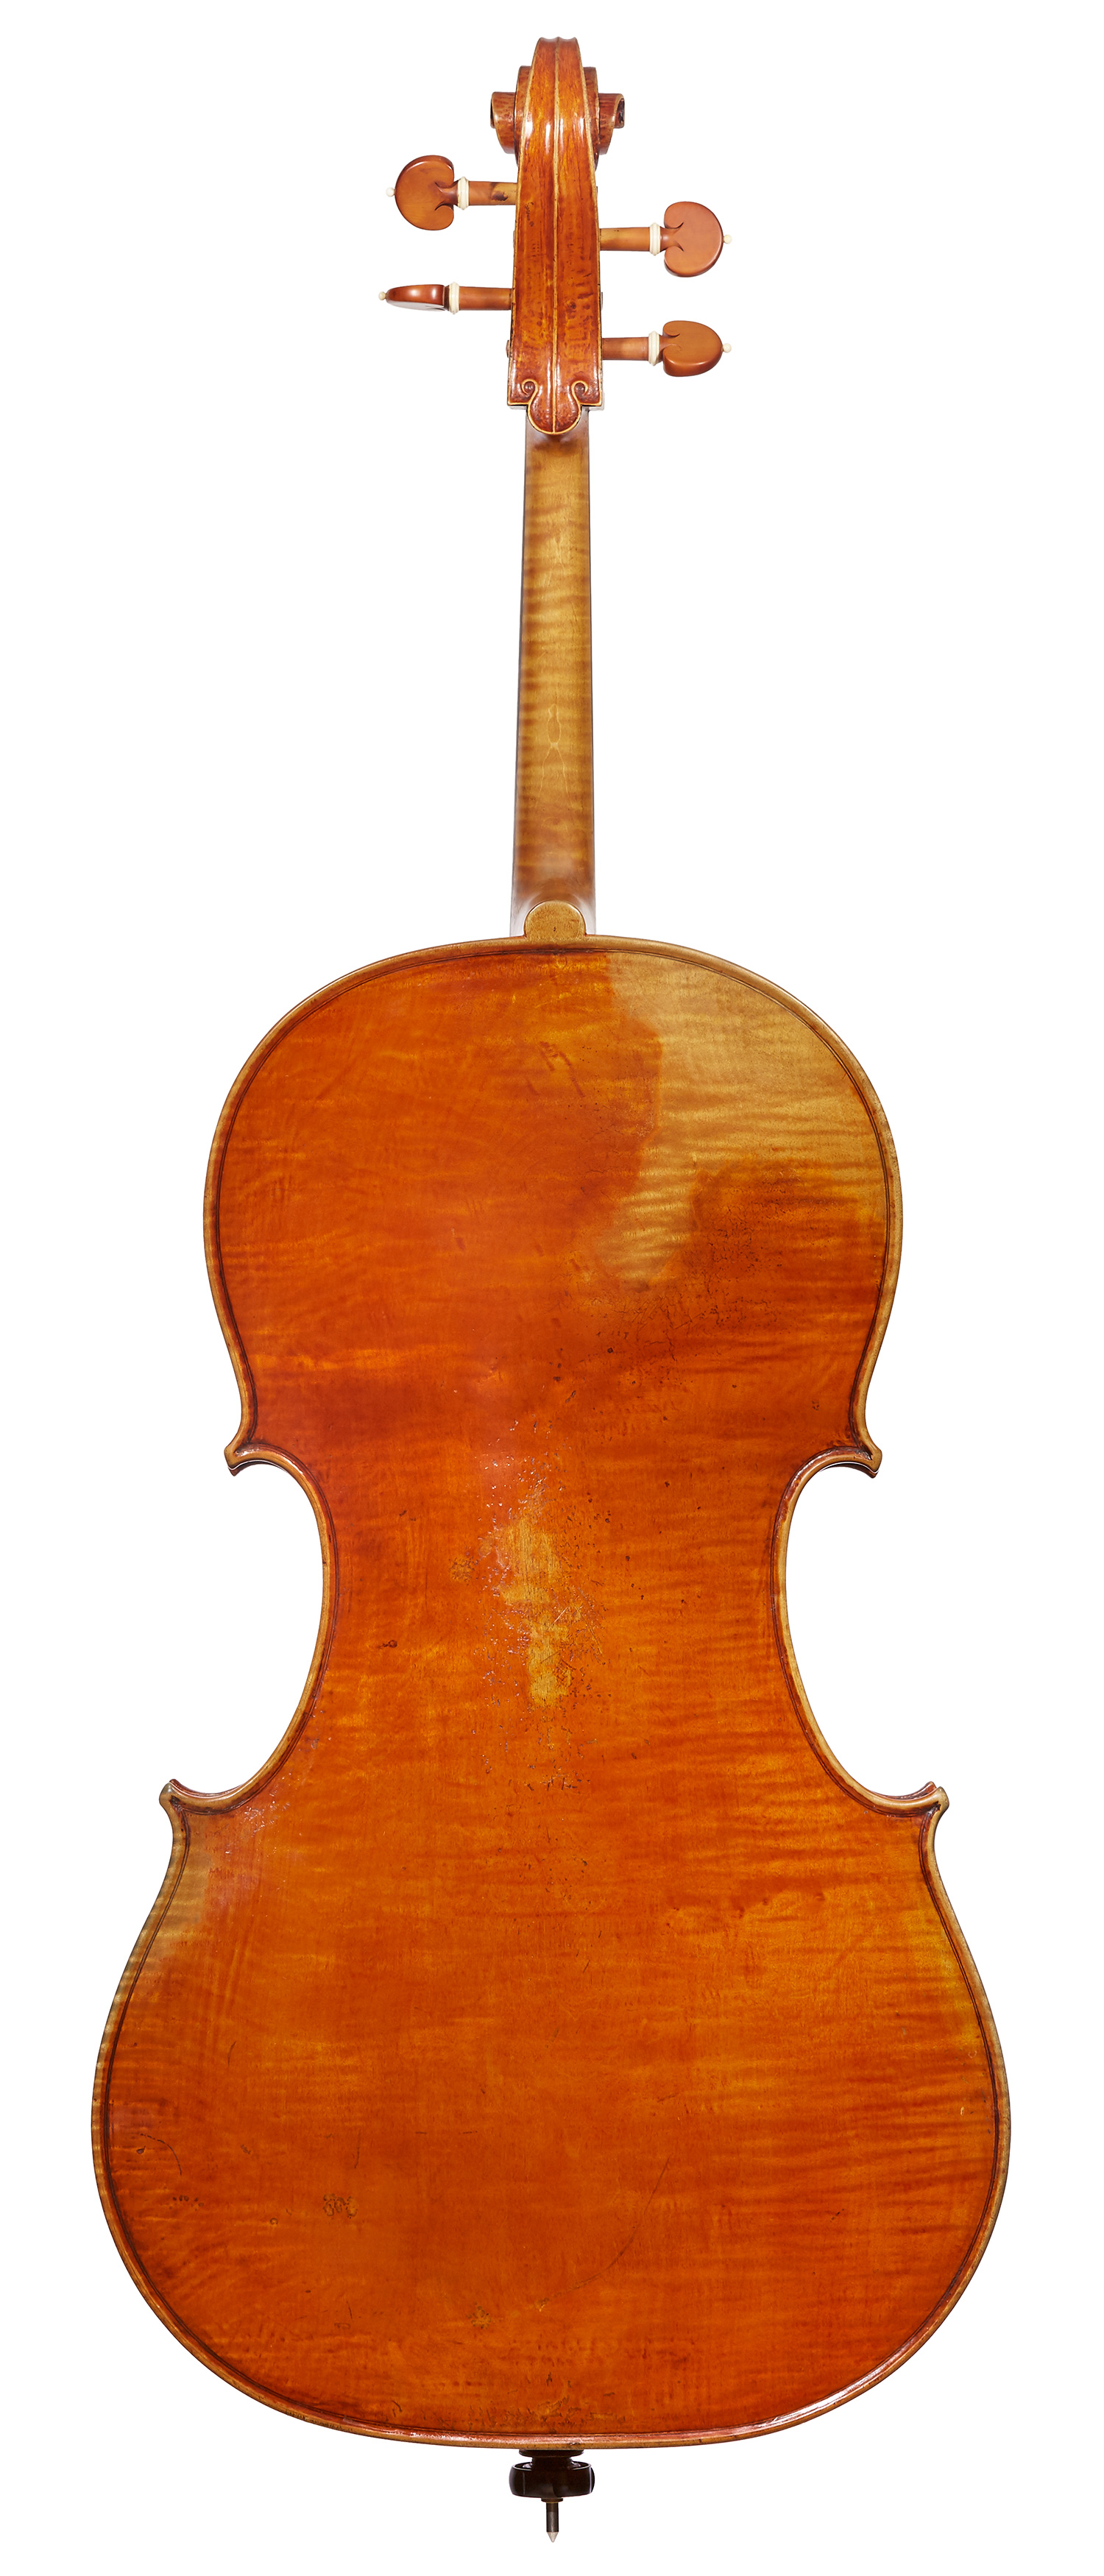 Greiner cello back